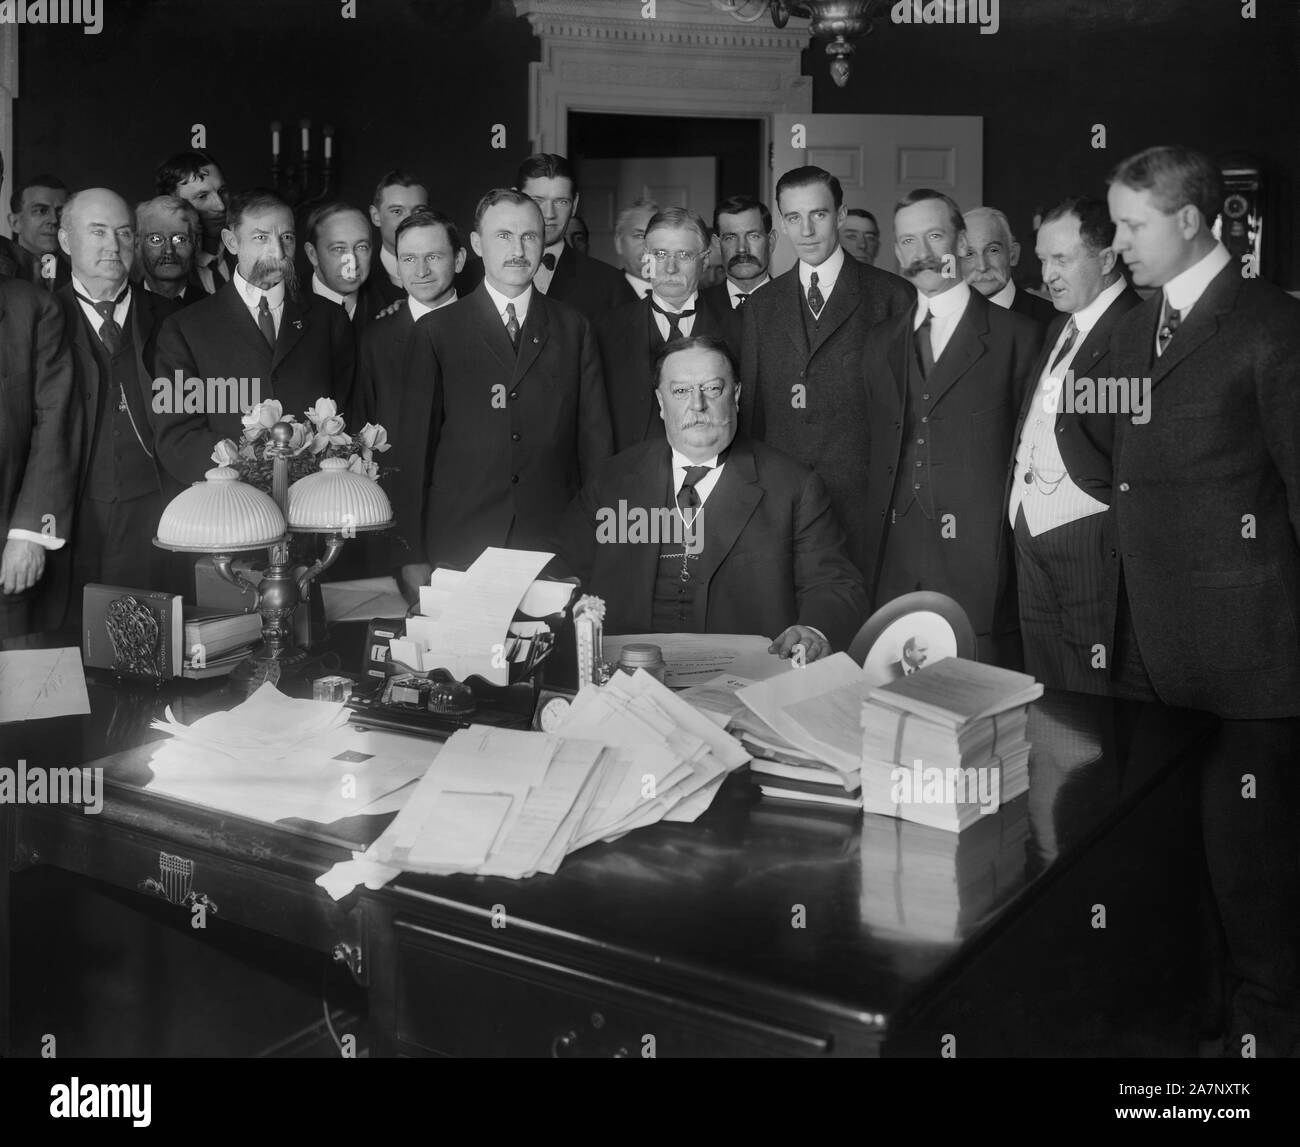 U.S. President William Howard Taft Signing Bill Making Arizona the 48th State of the Union, Washington, D.C., USA, Photograph by Harris & Ewing, February 14, 1912 Stock Photo